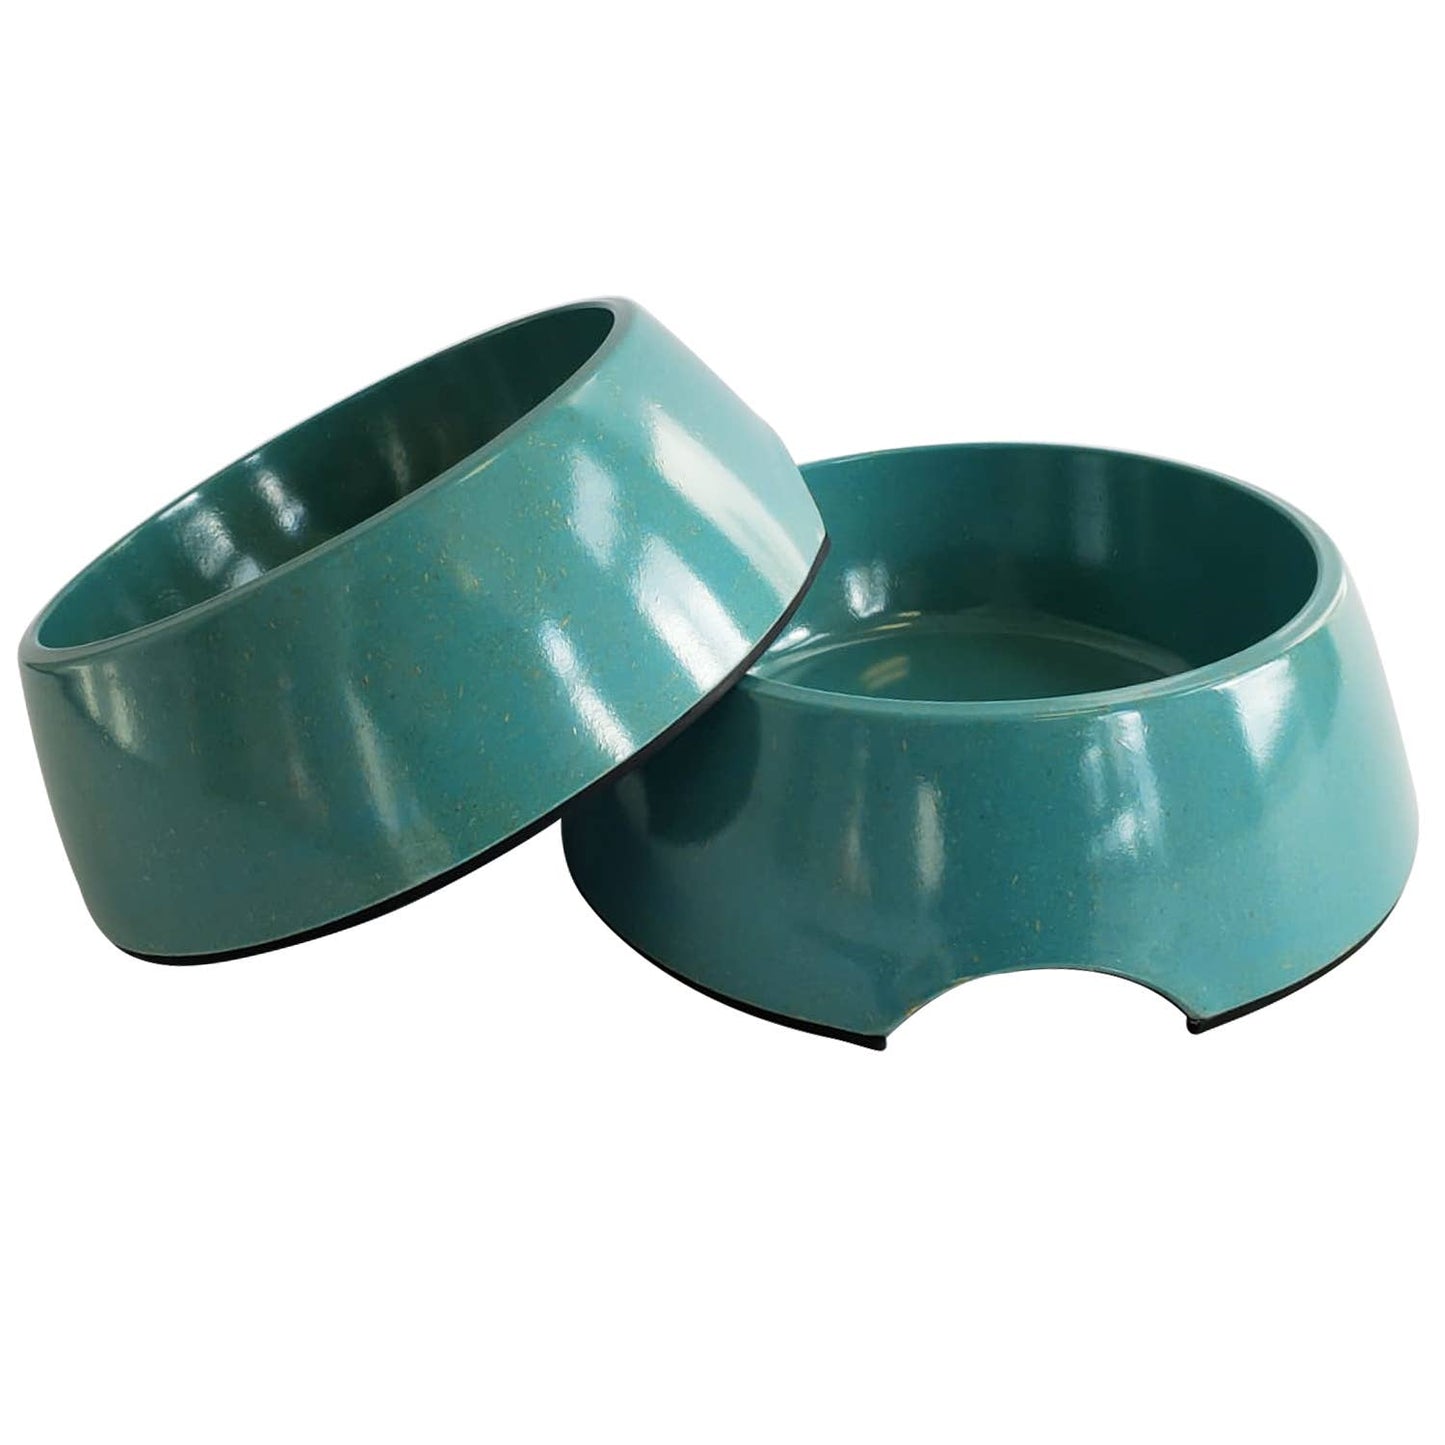 Bamboo Dog Bowl - Eco-Friendly, Non-Toxic, Teal Blue